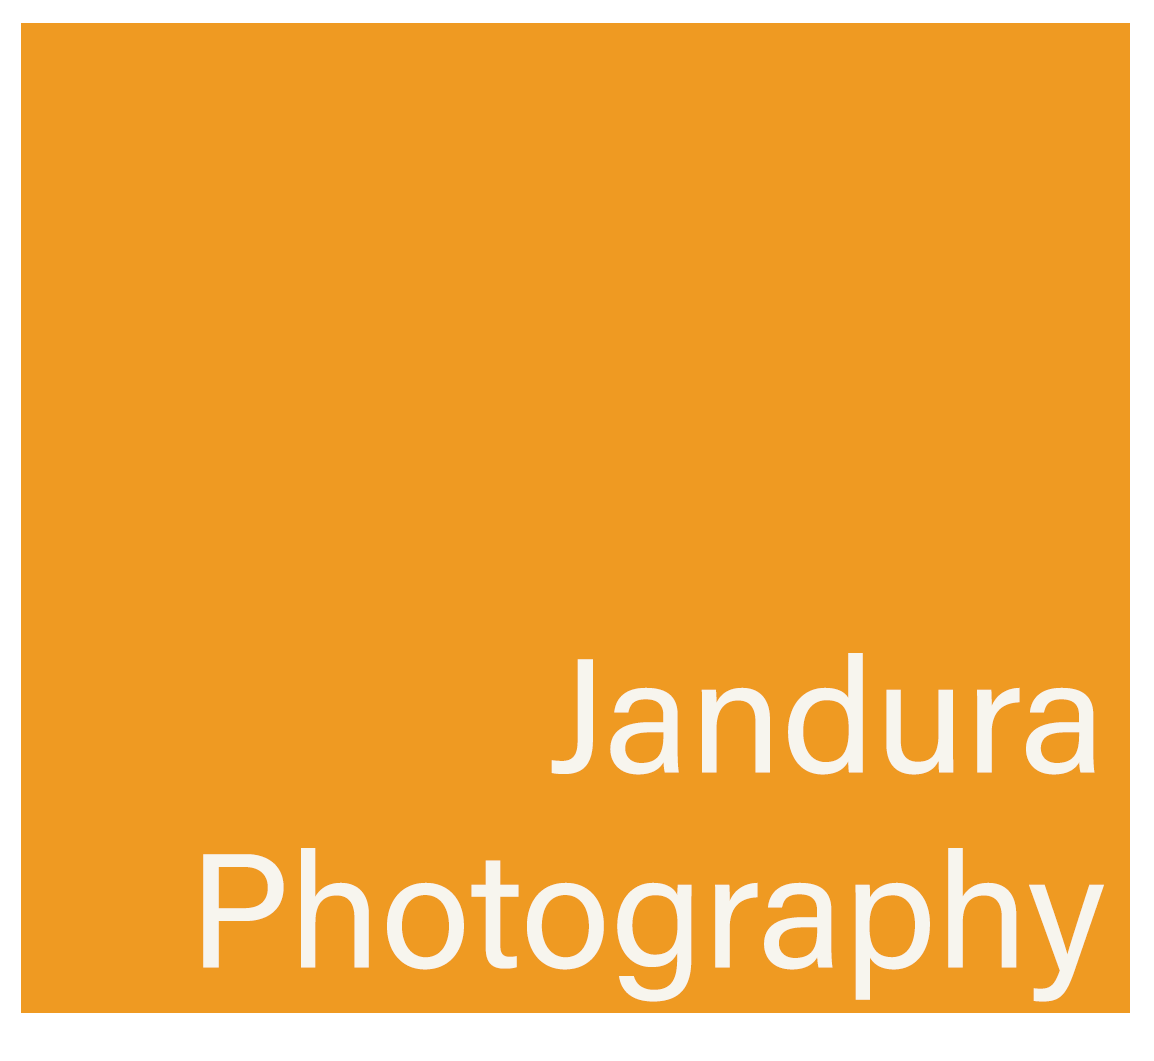 Jandura Photography